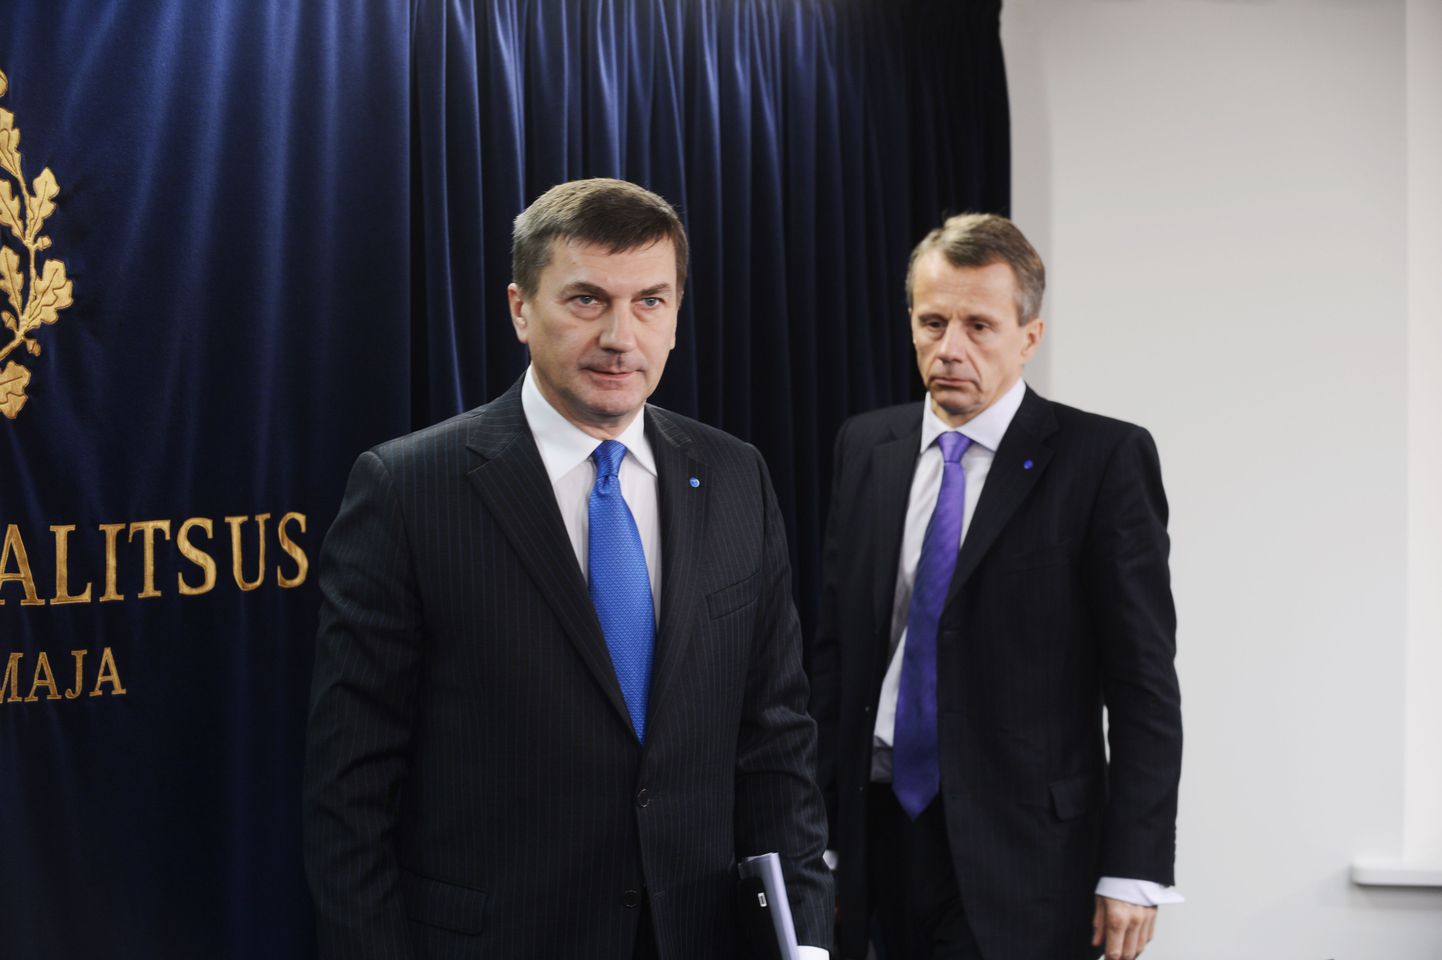 Valitsuse pressikonverents Stenbocki majas. Peaminister Andrus Ansip ja rahandusminister Jürgen Ligi.